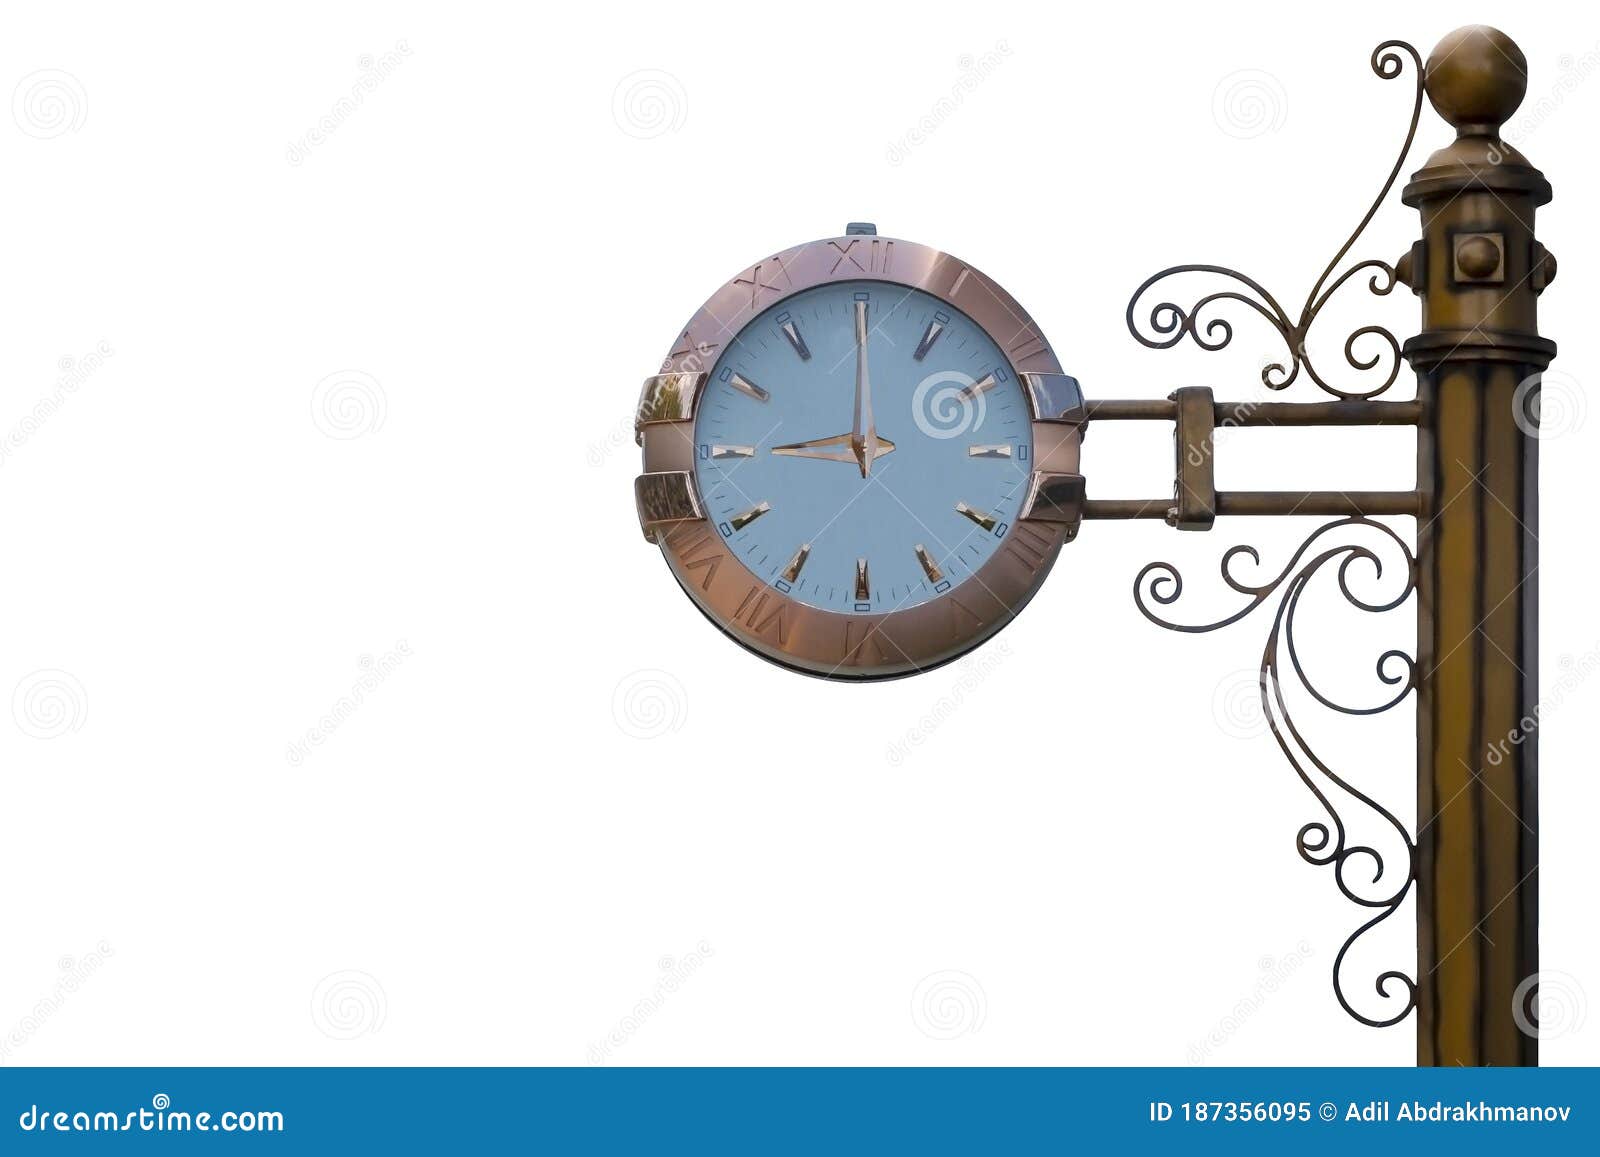 classic style streeet clock. 9 o`clock.